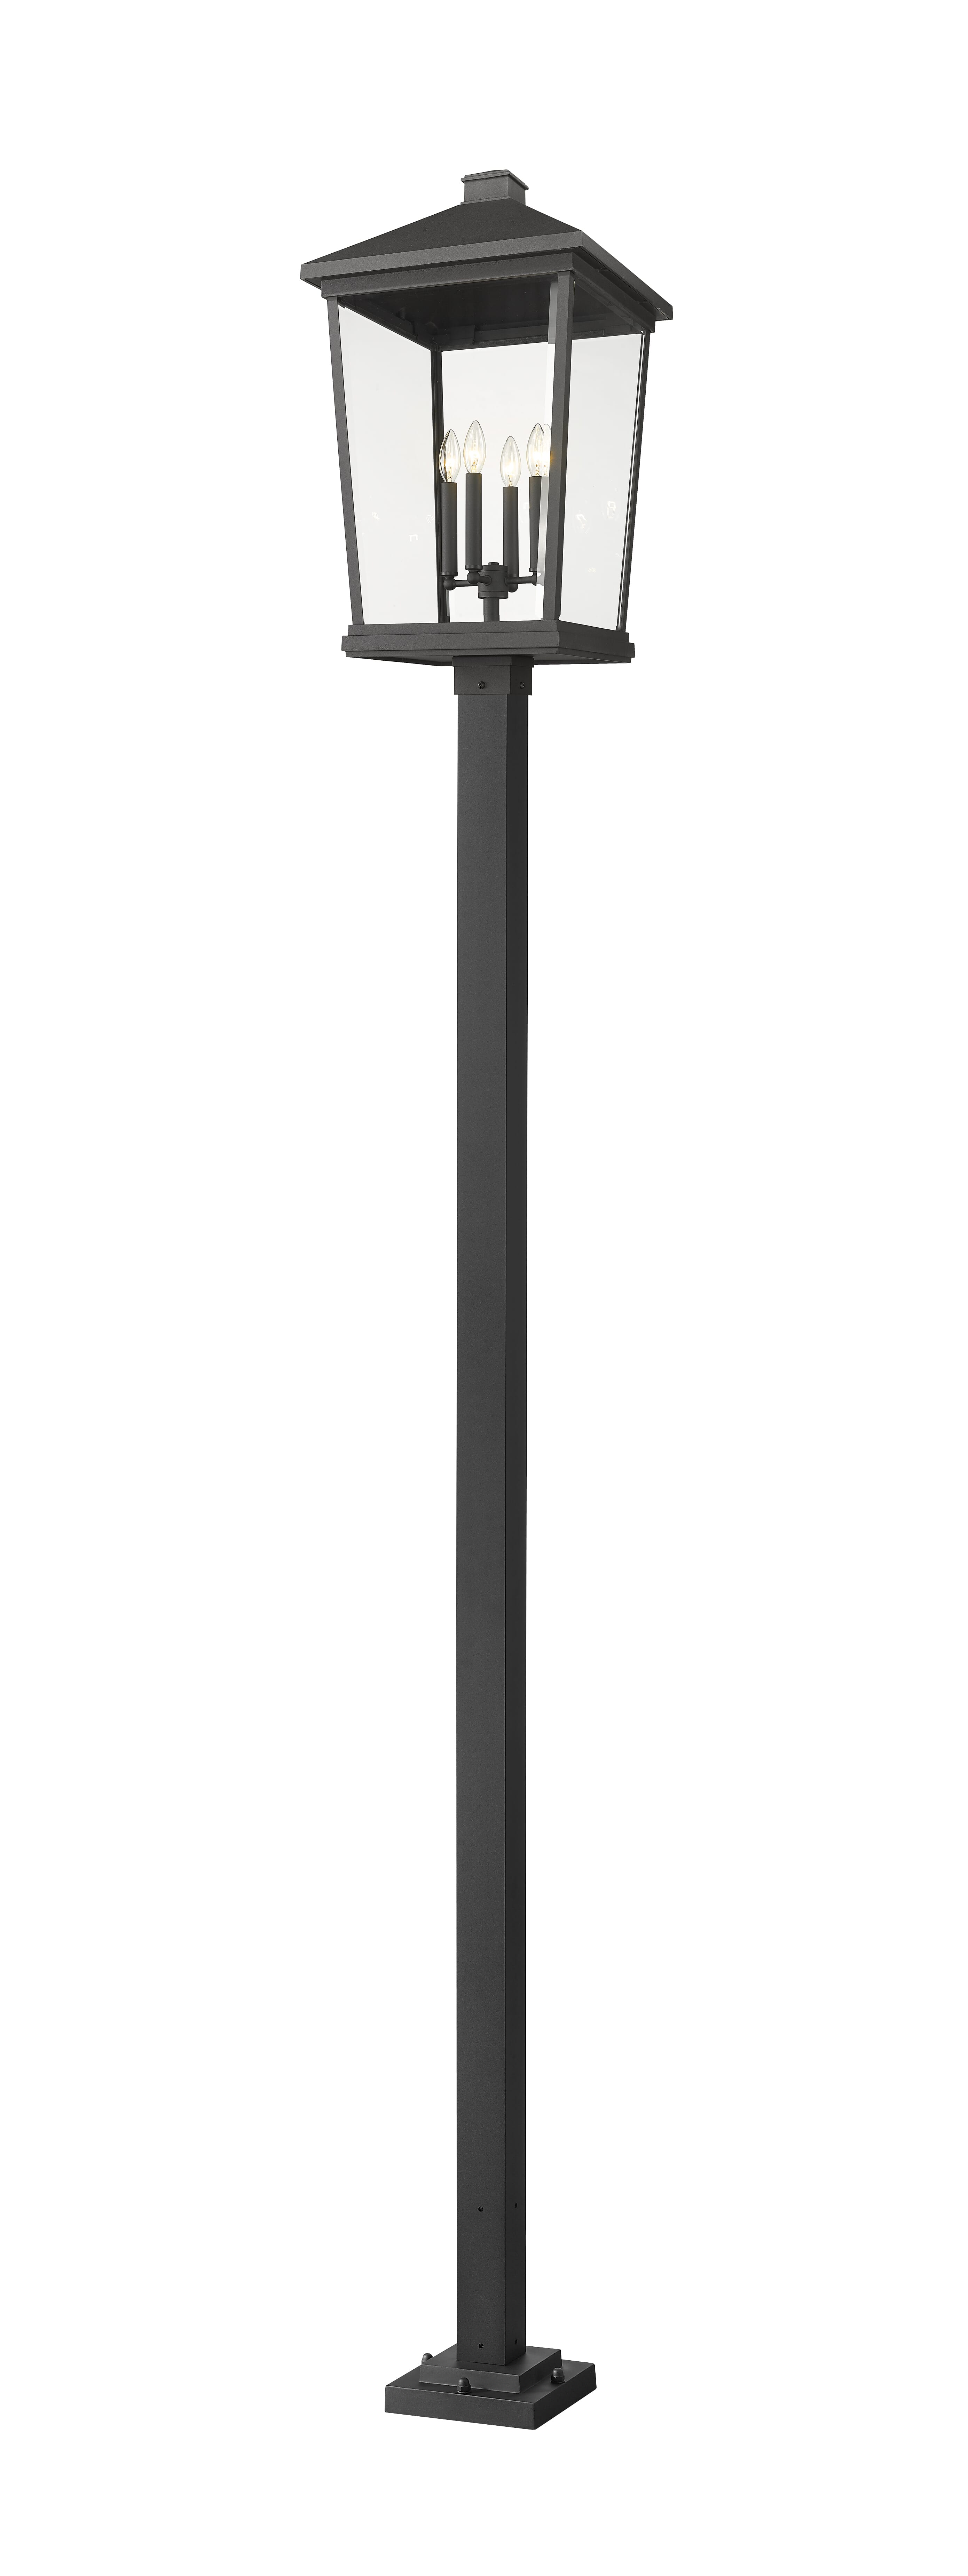 Beacon 4-Light Outdoor Post Mounted Fixture Light In Black